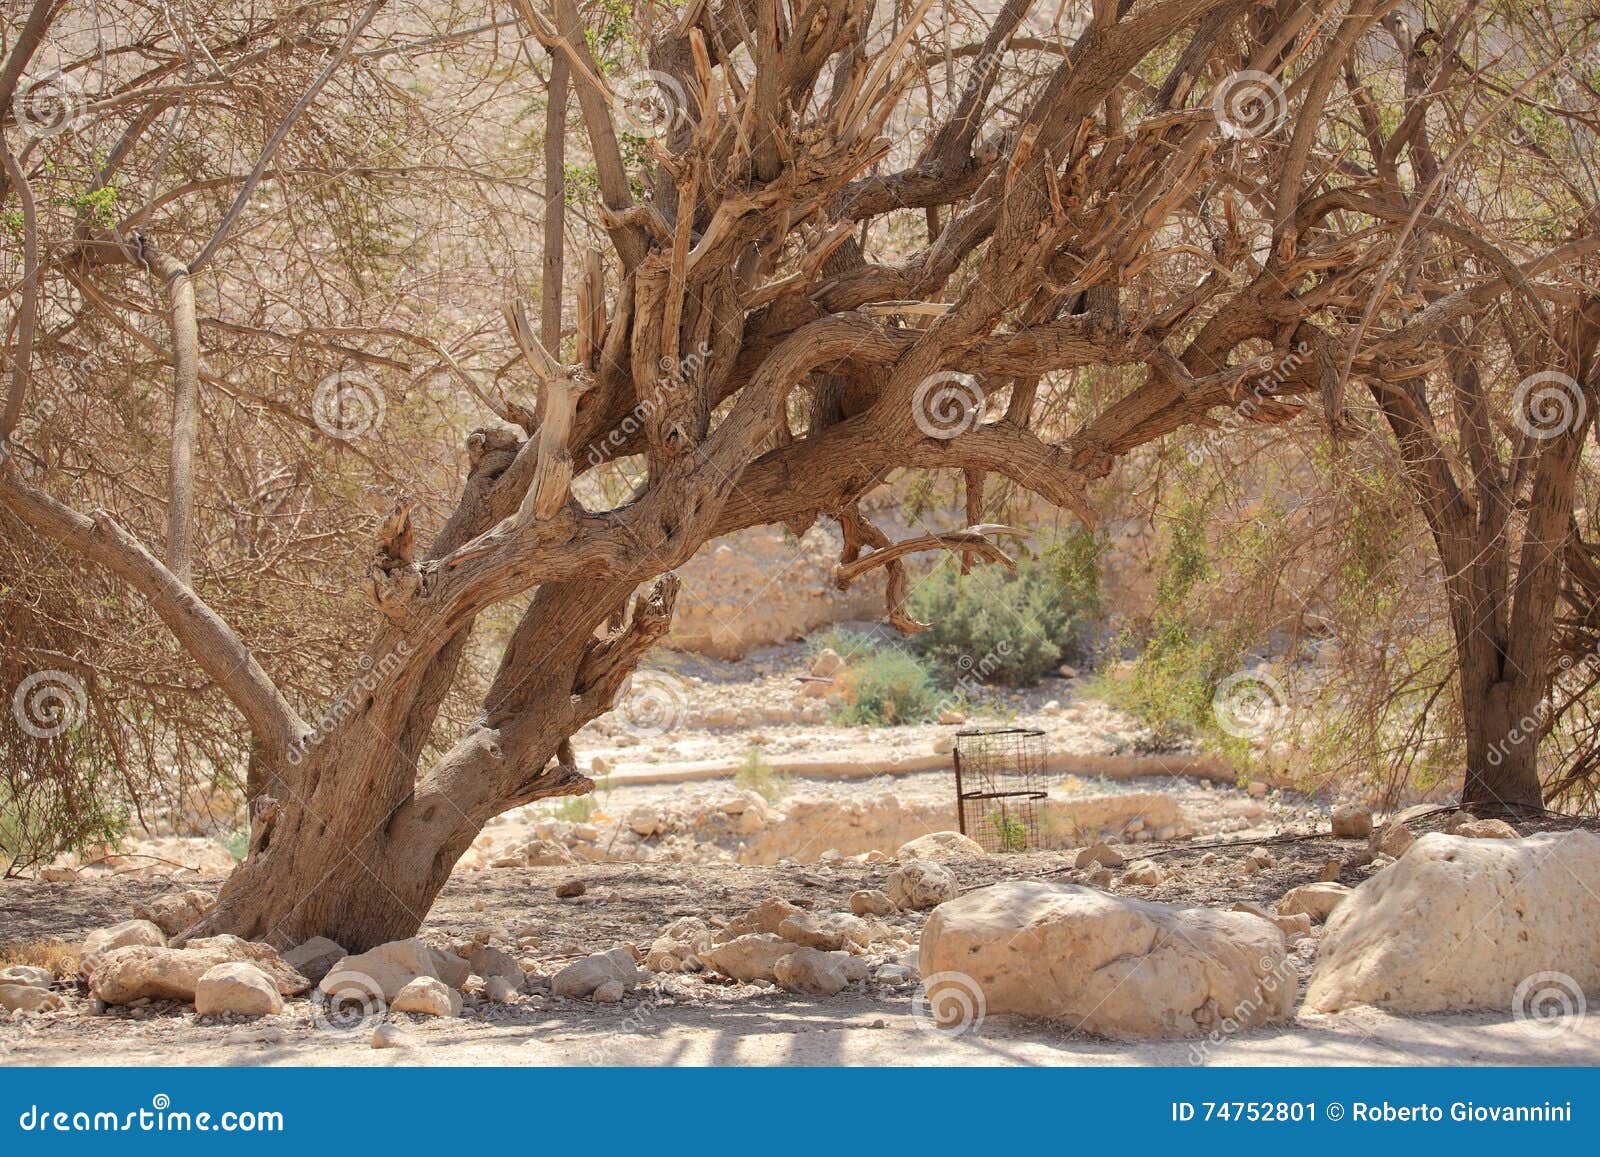 old tree in the desert oasis of ein gedi